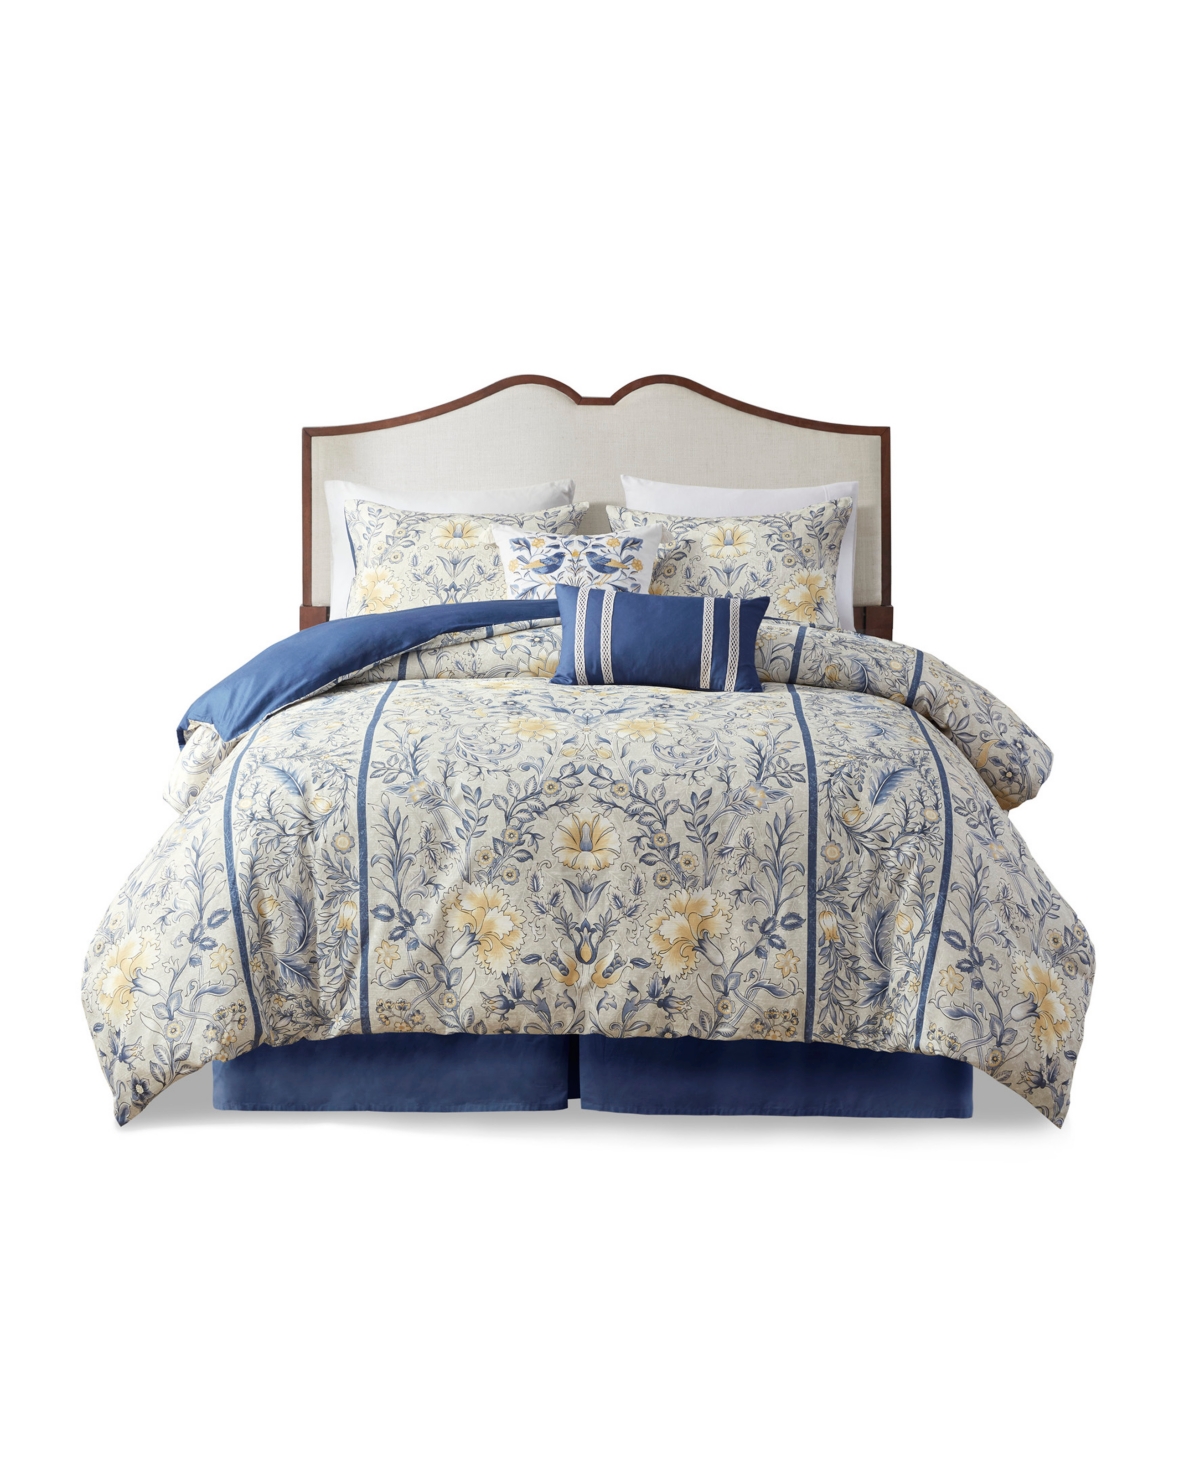 Harbor House Livia 6-pc. Comforter Set, King In Multi